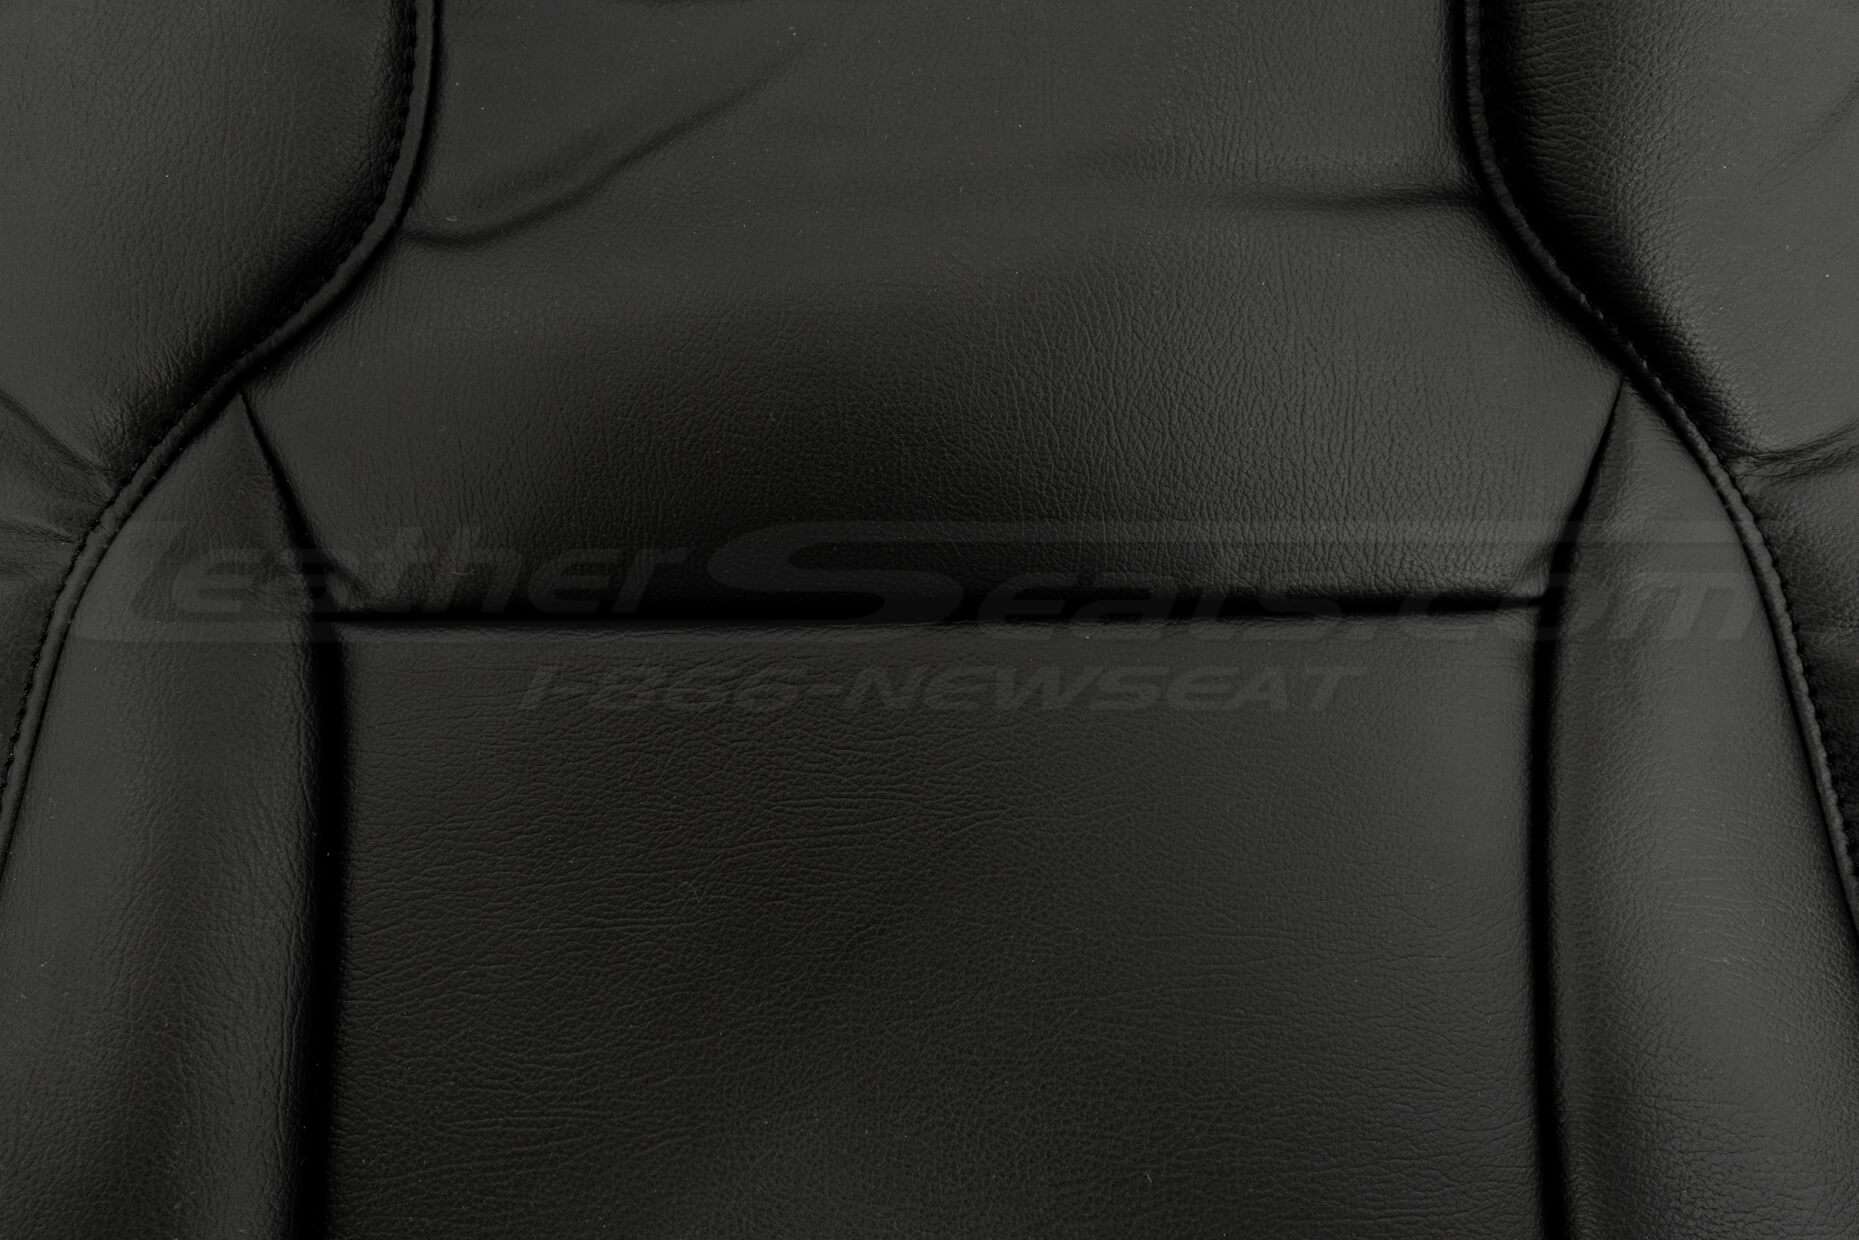 Ford Taurus Leather Upholstery Kit - Black - Backrest insert close-up